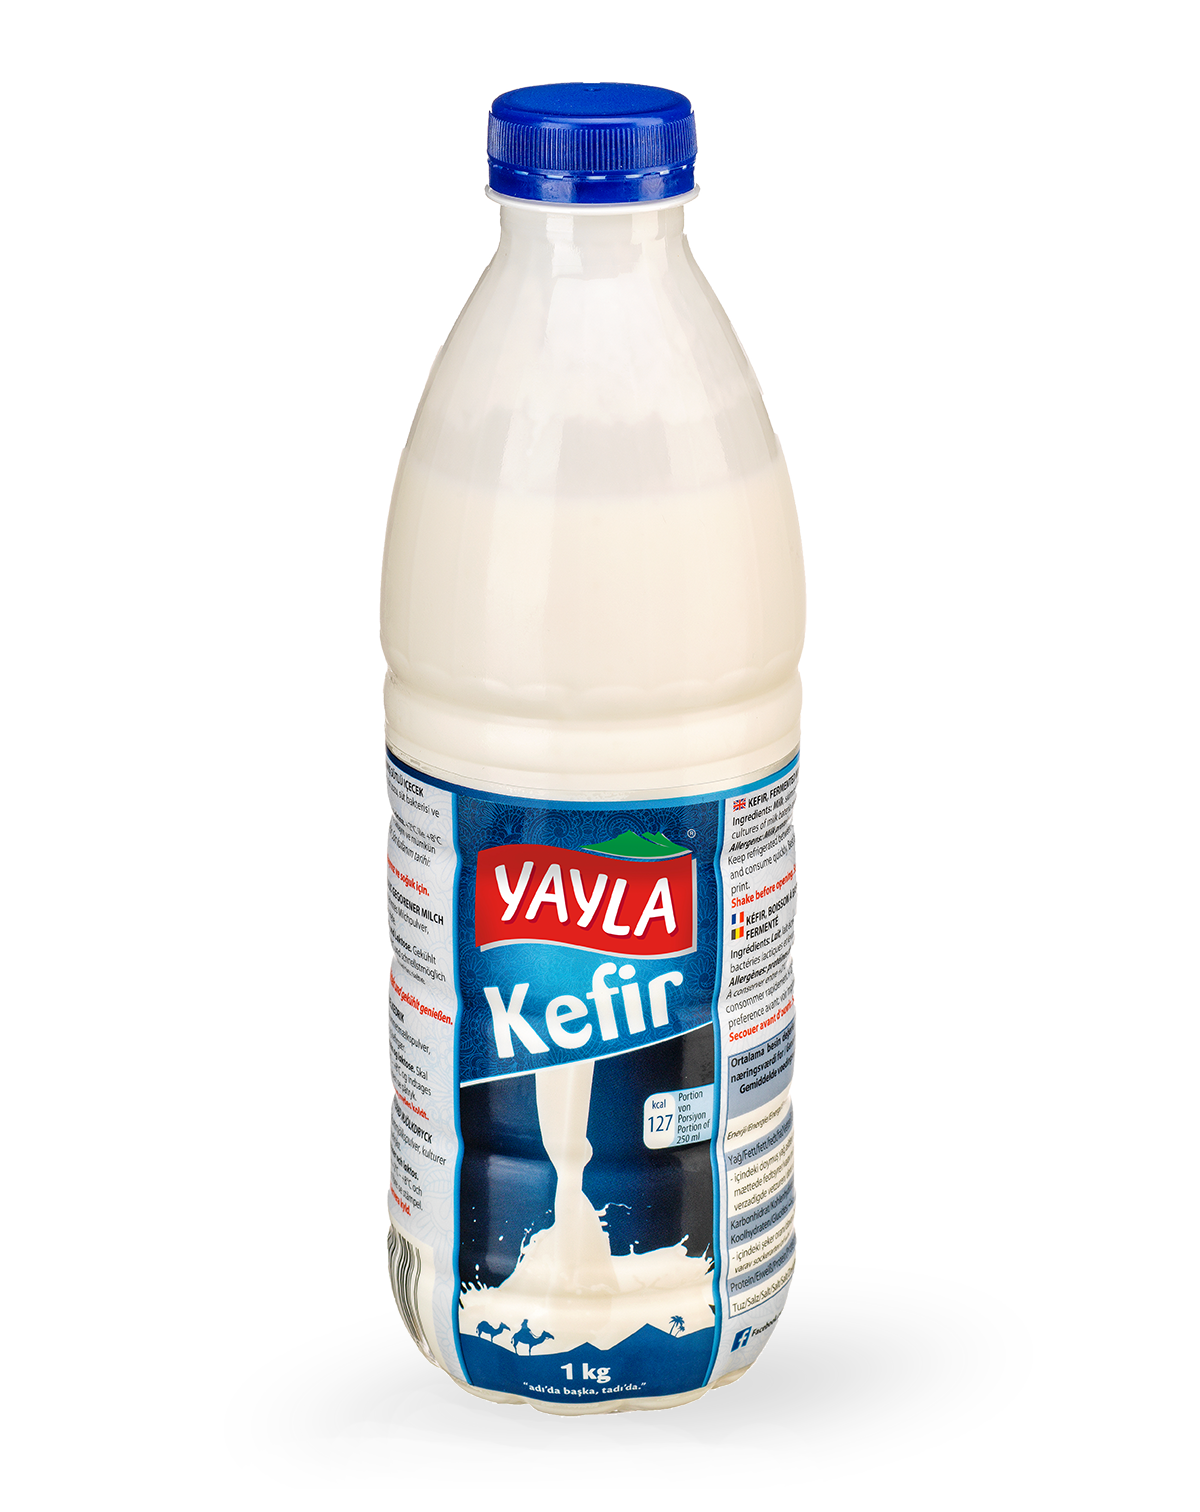 Kefir - fermented milk drink